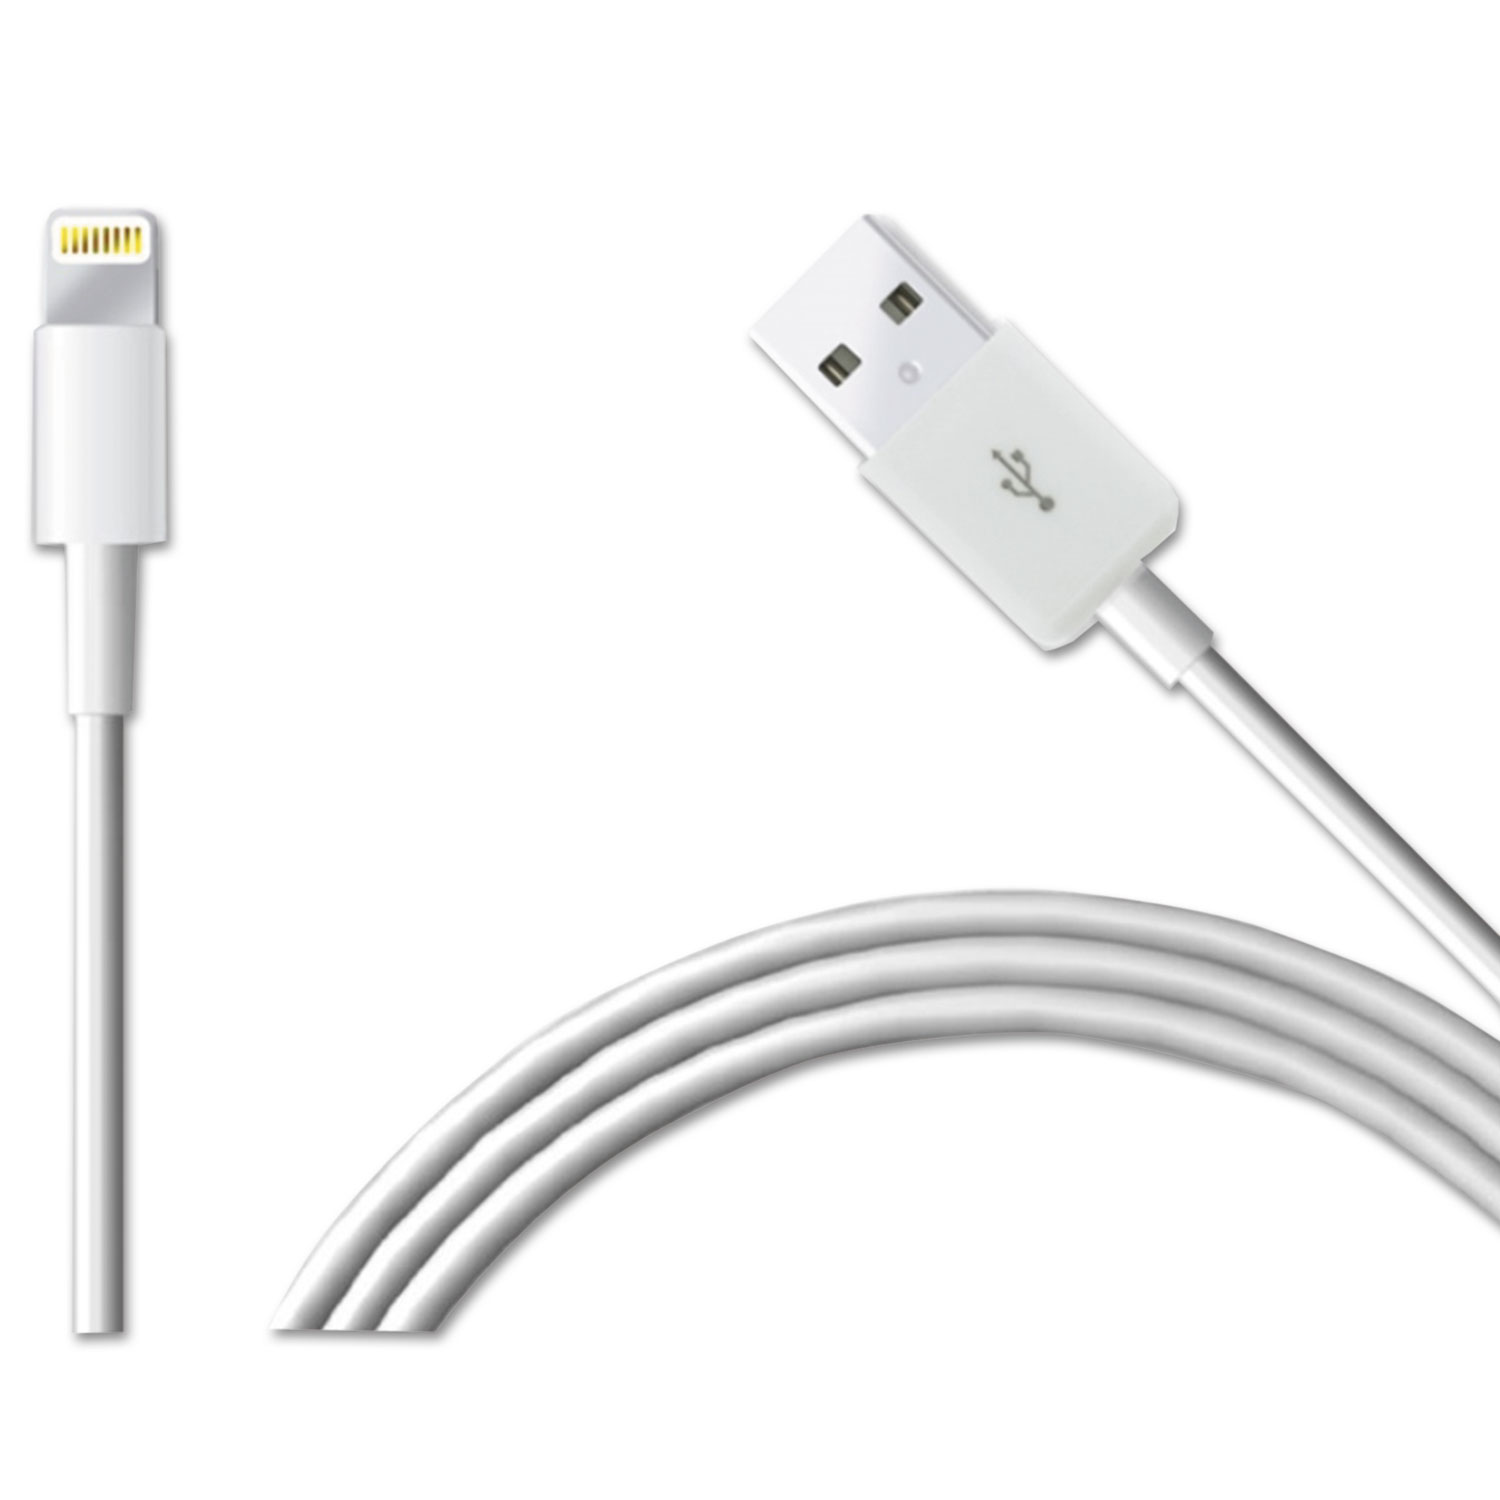 Bytech Apple Lightning Cable, 10 Ft, White - image 1 of 2